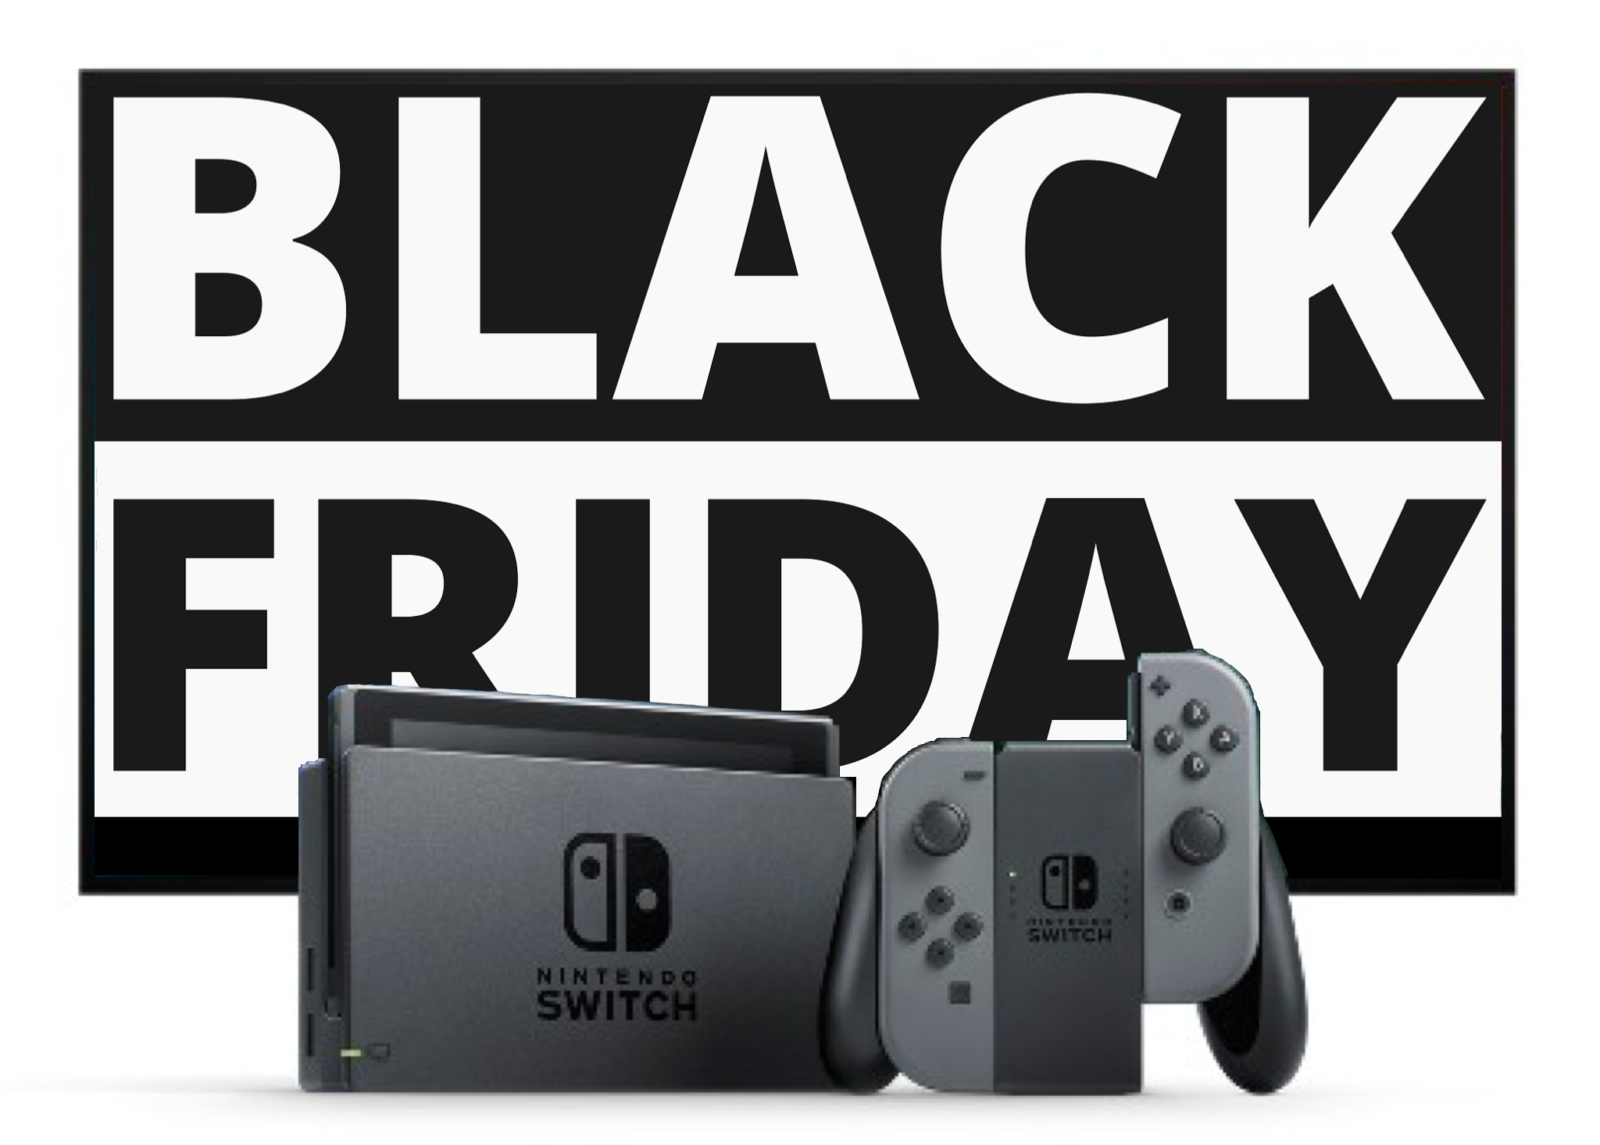 Nintendo Switch Black Friday 2017 Deals! - NintendoFuse